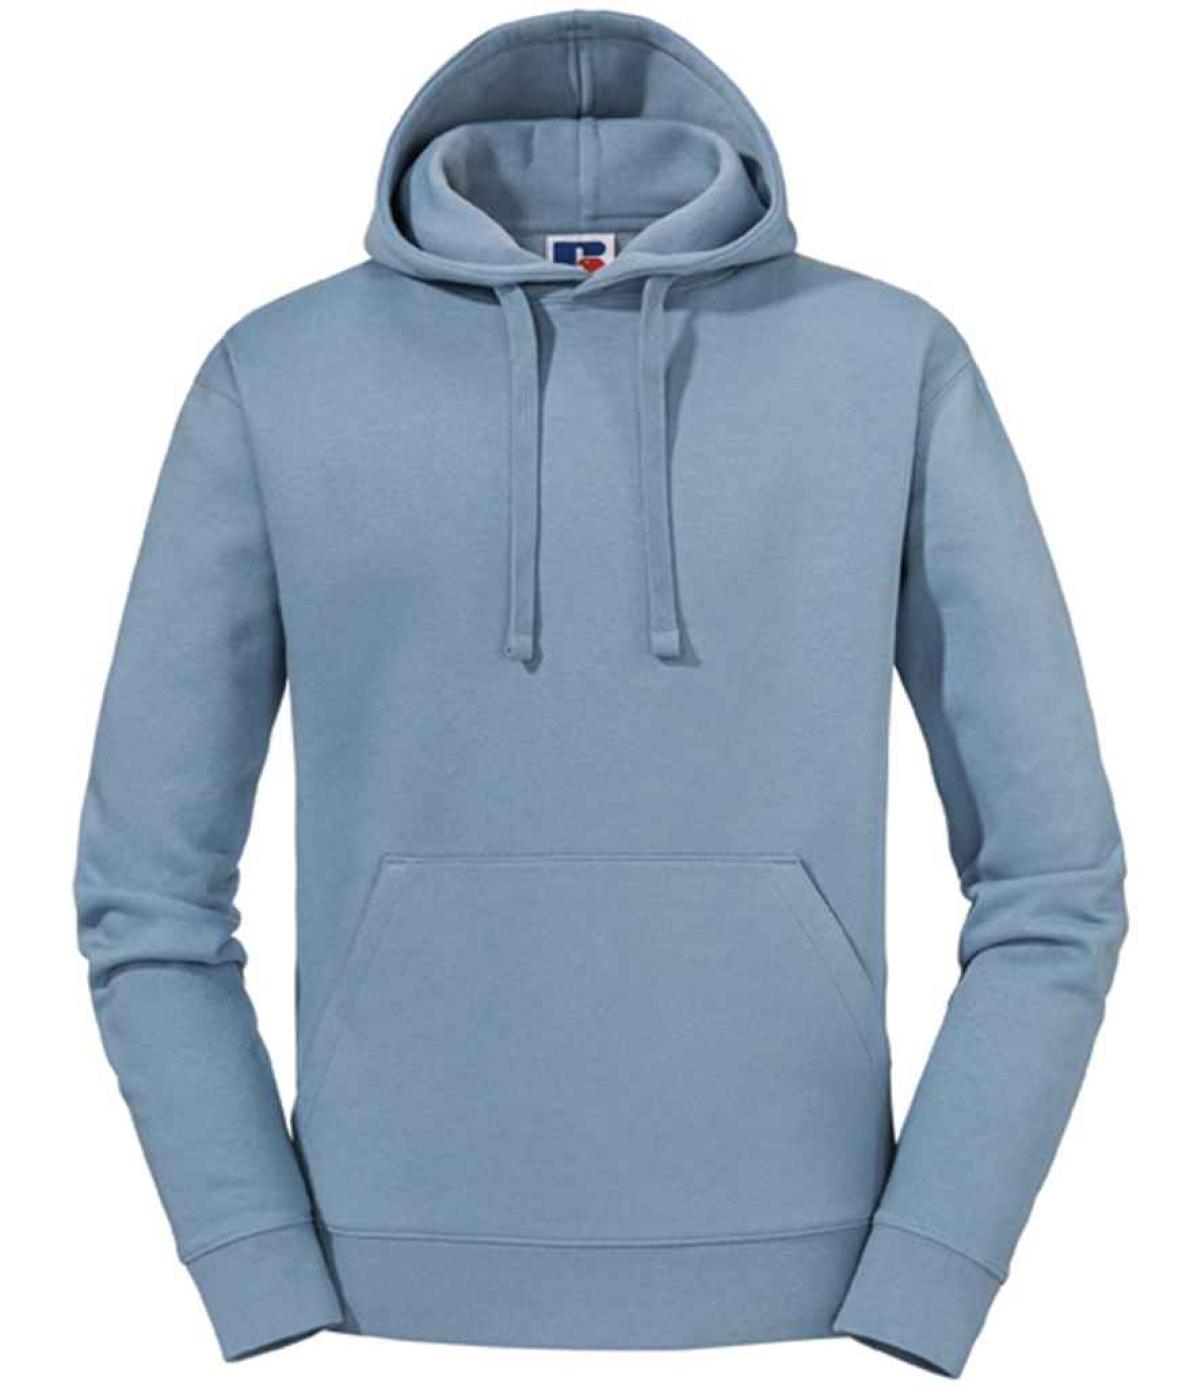 Russell Authentic Hooded Sweatshirt - Mineral Blue | Order Uniform UK Ltd